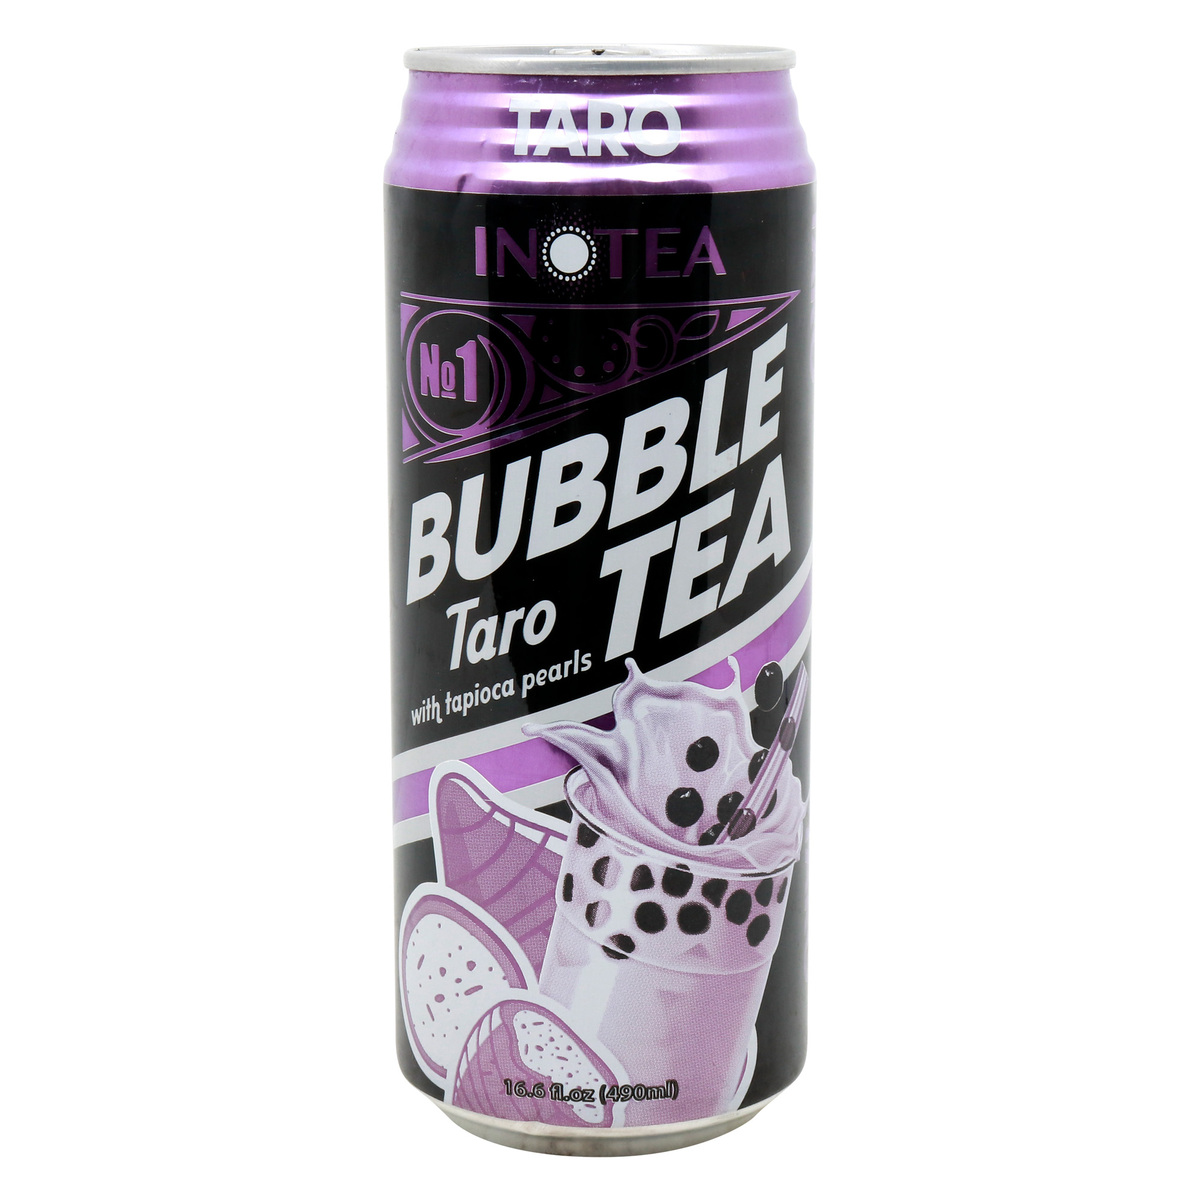 Inotea Bubble Taro Tea with Tapioca Pearls, 490 ml